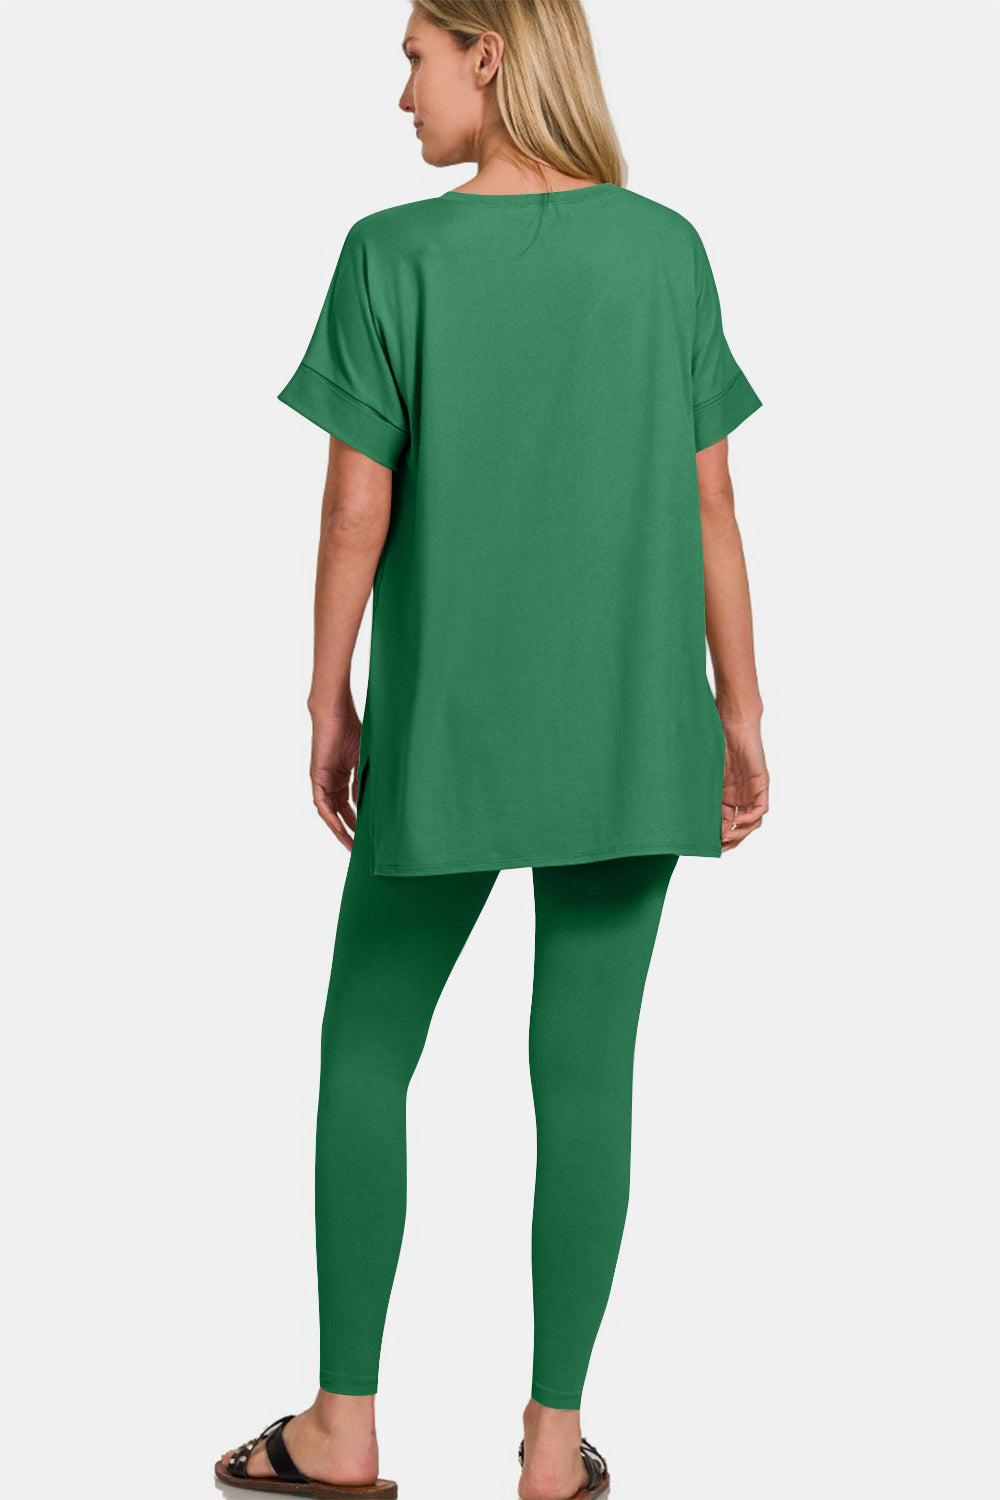 Zenana Forest Green V-Neck Rolled Short Sleeve T-Shirt and Leggings Lounge Set Trendsi